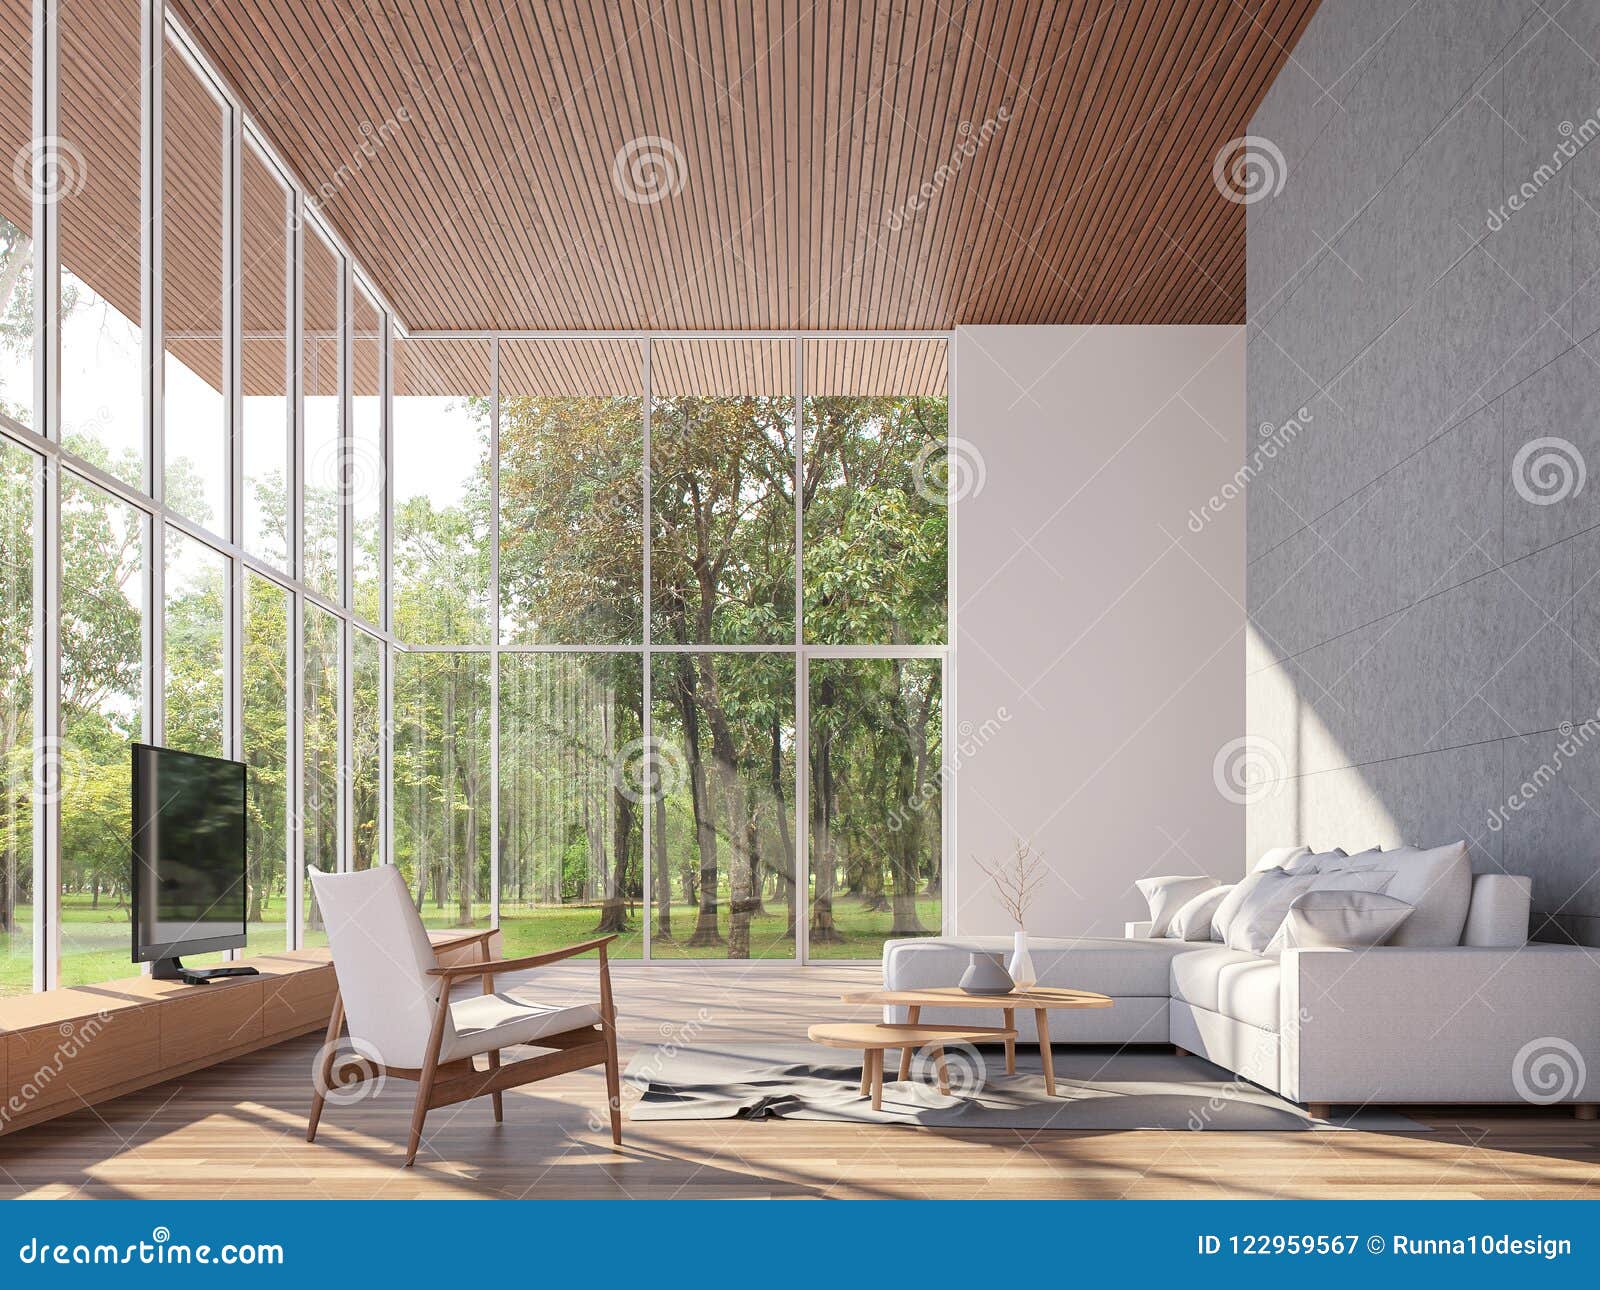 tropical house living room 3d render